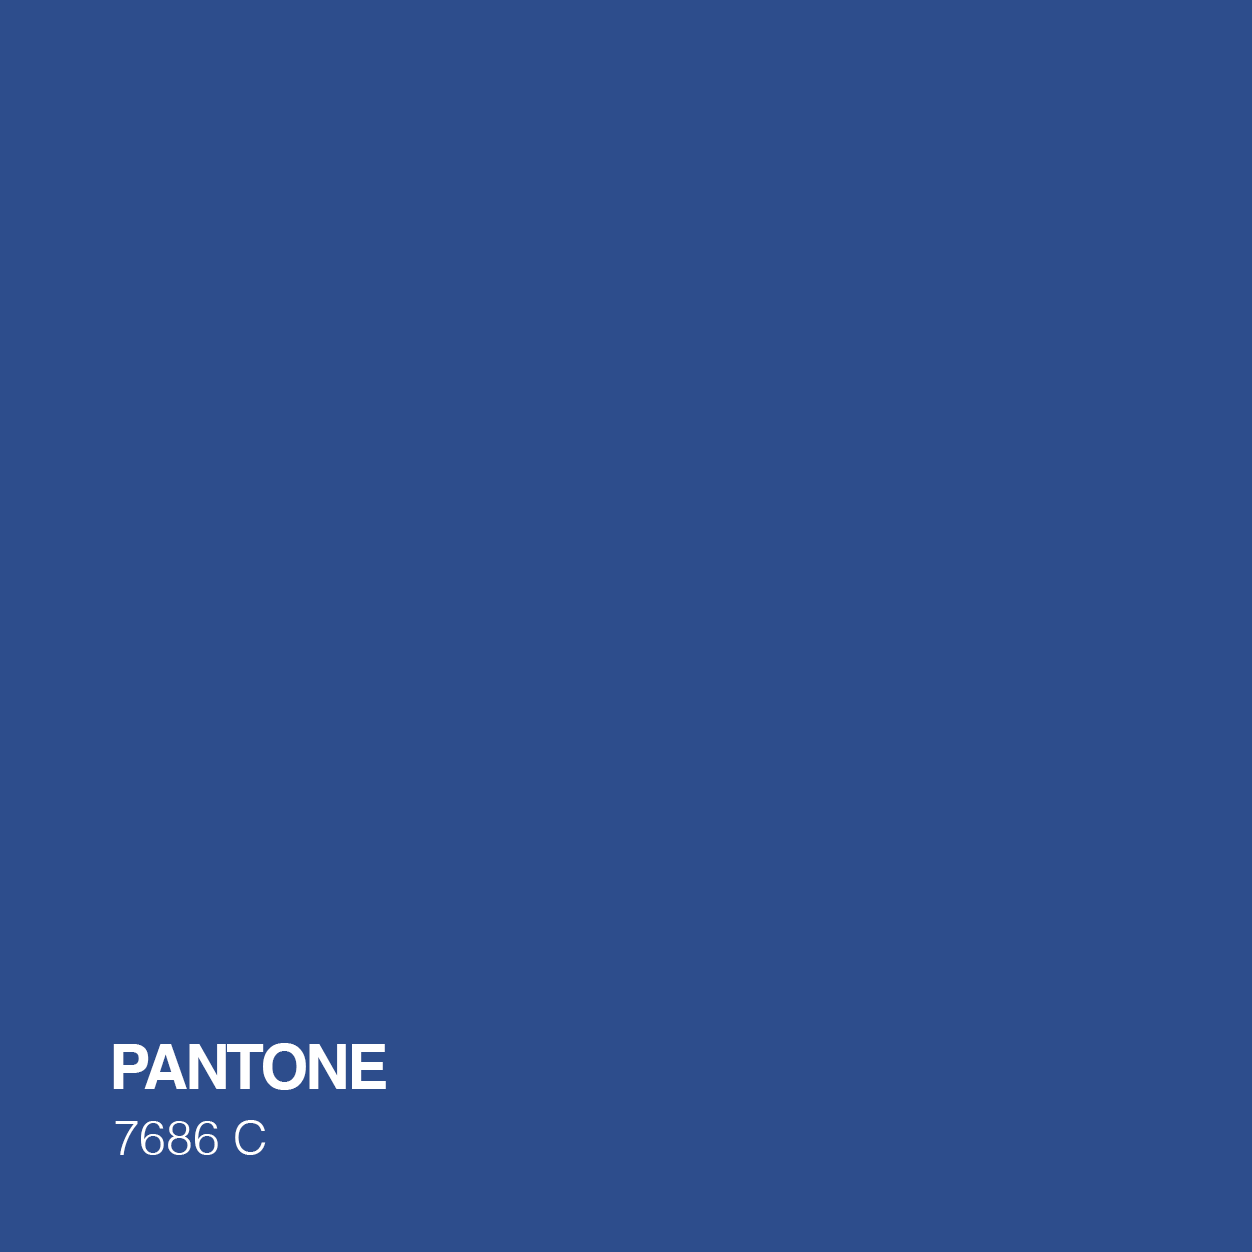 HYM Pantoe graphic Blue- 3.png